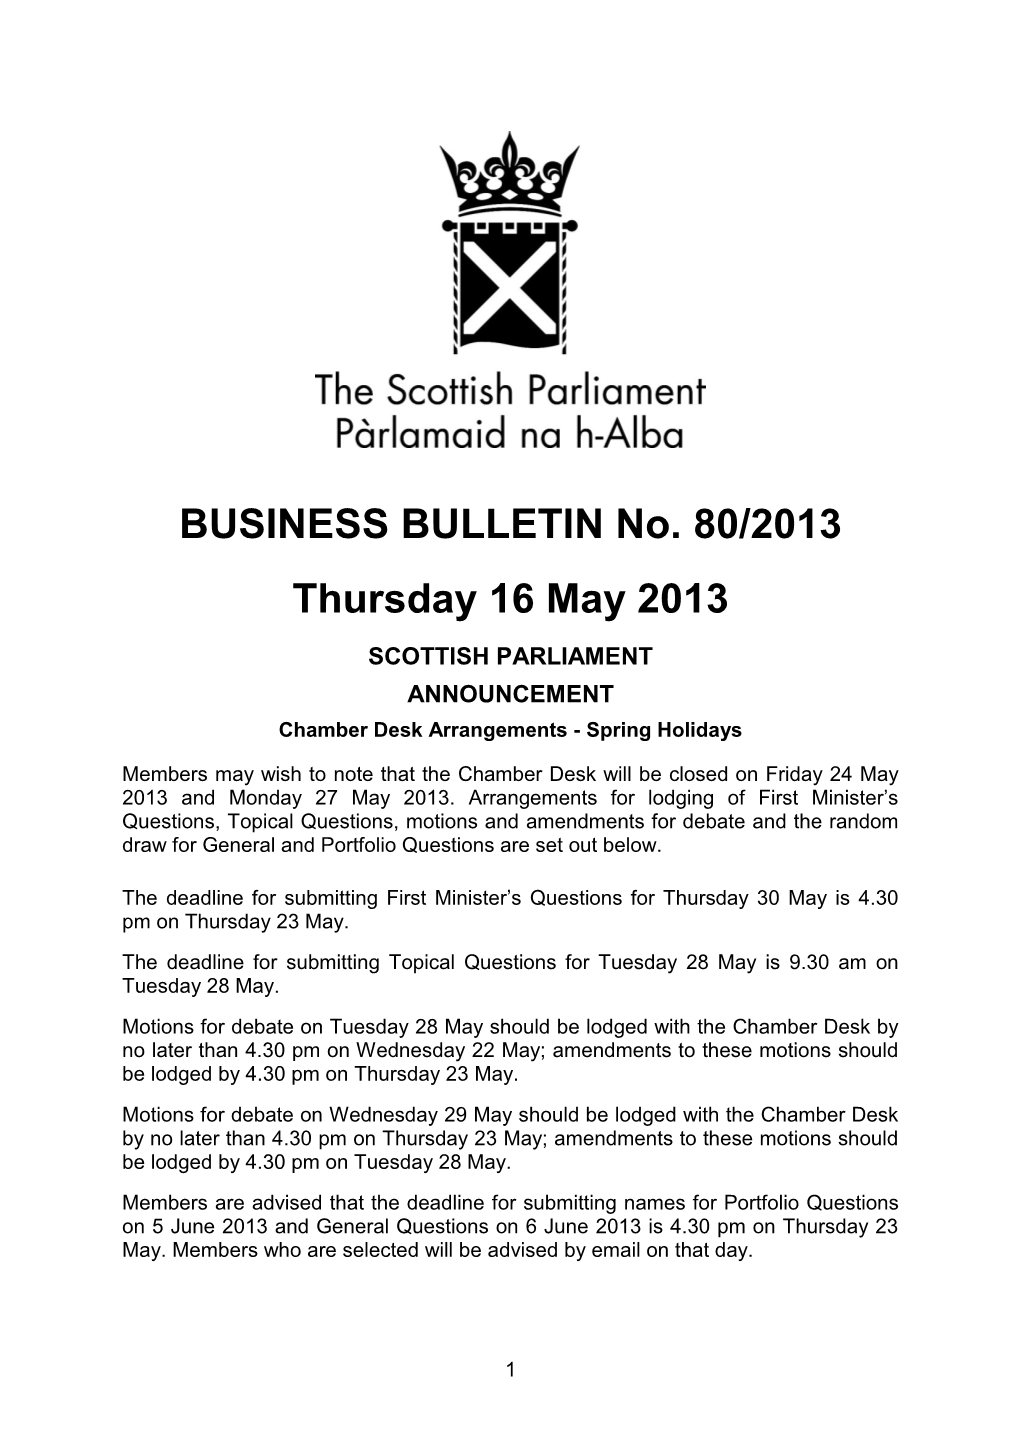 BUSINESS BULLETIN No. 80/2013 Thursday 16 May 2013